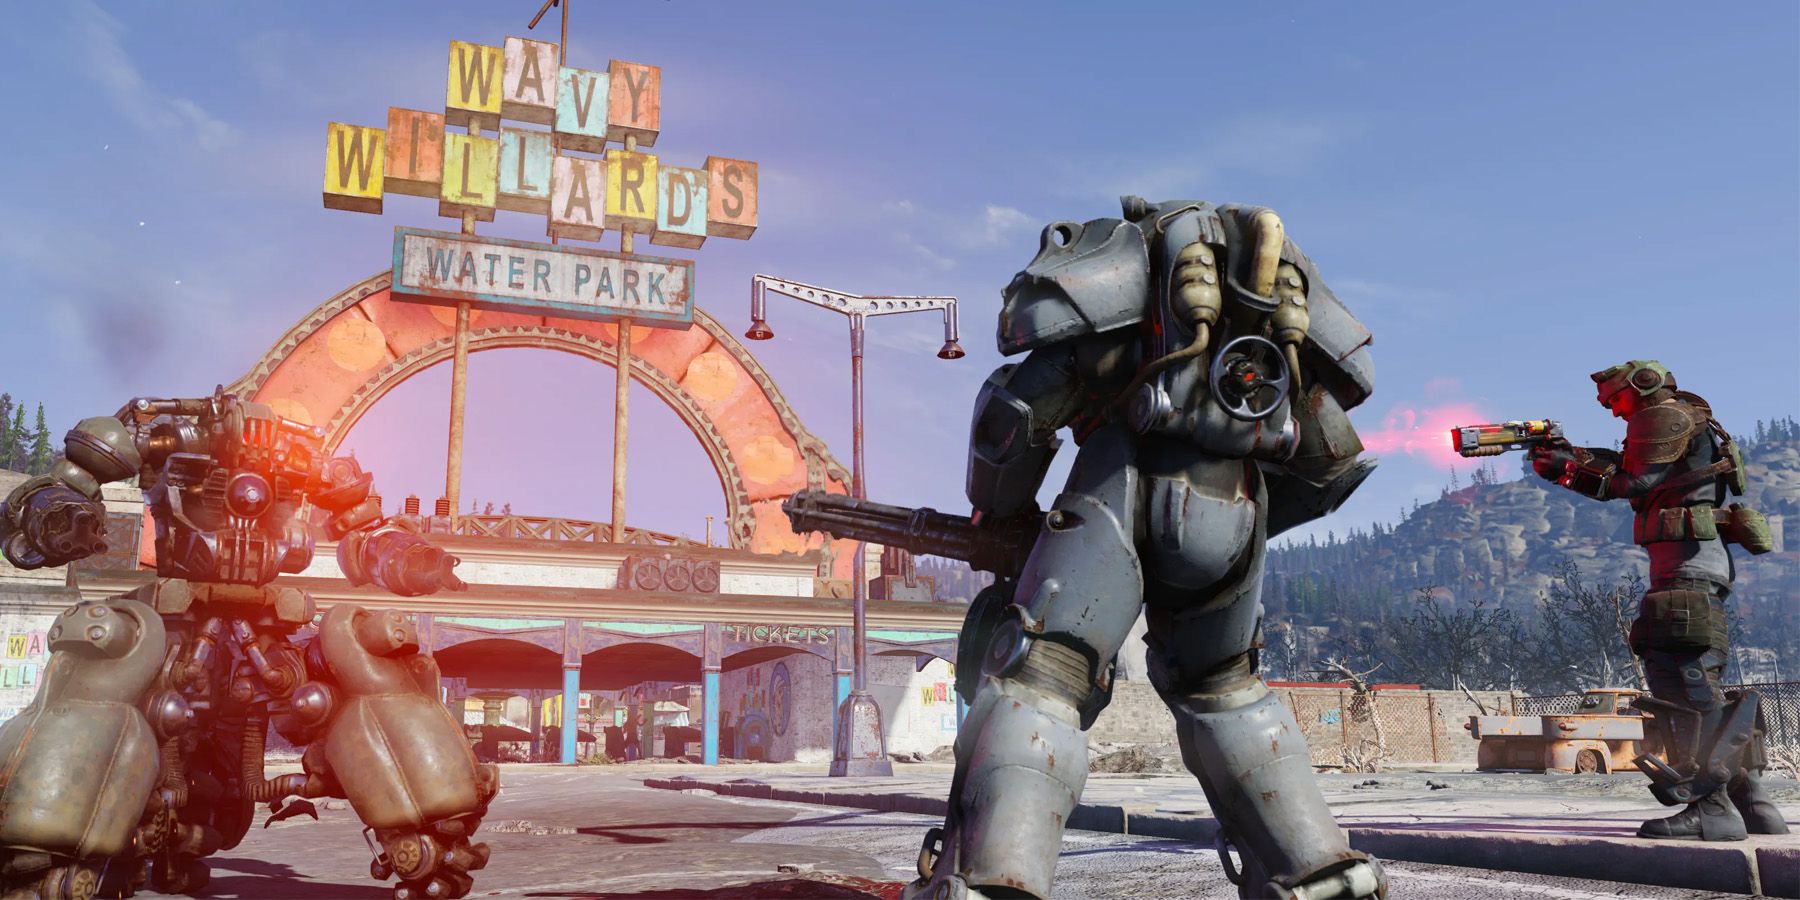 Fallout 76 - Wavy Willards Water Park